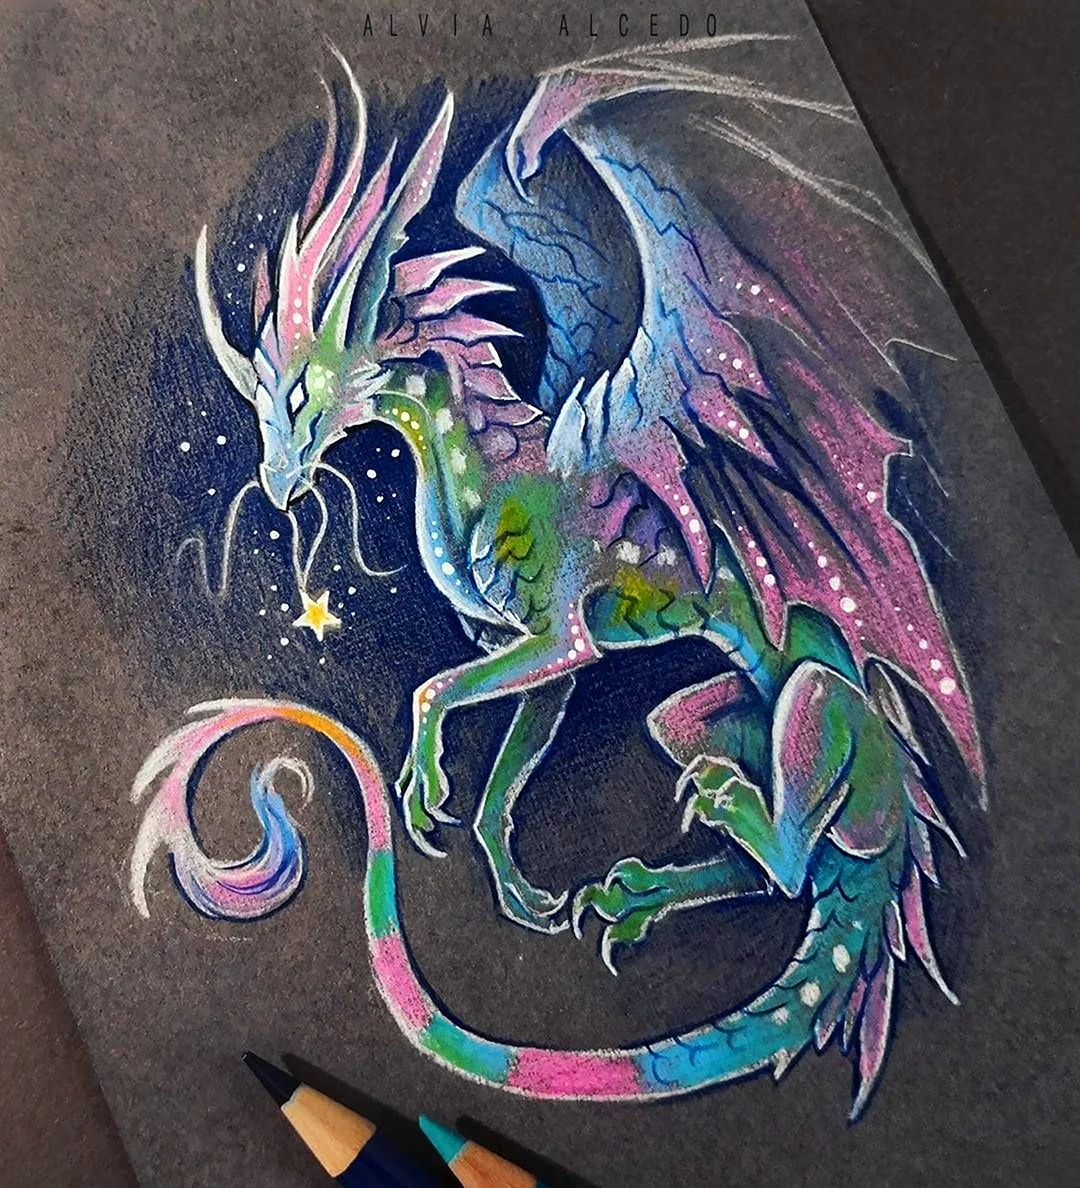 Alvia драконы